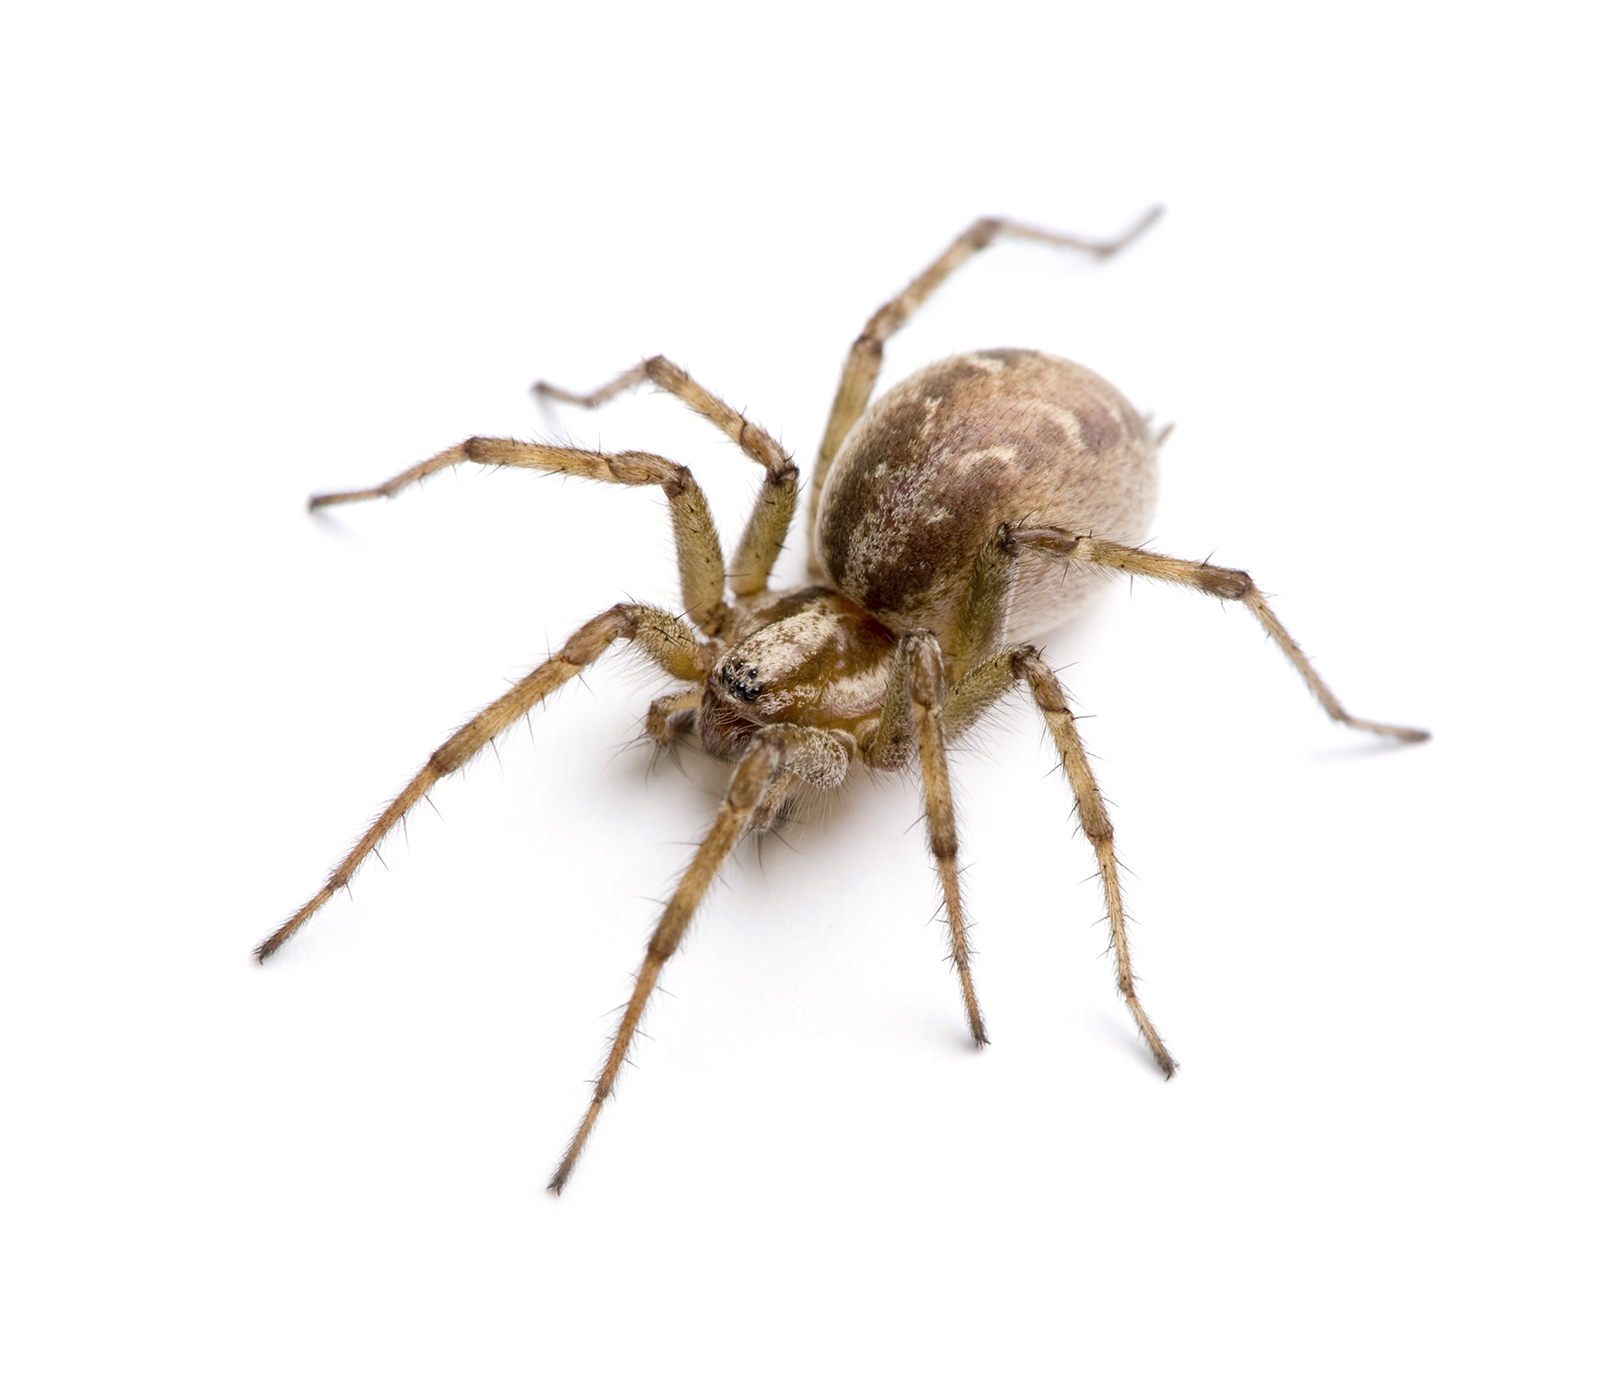 Male vs female house spider